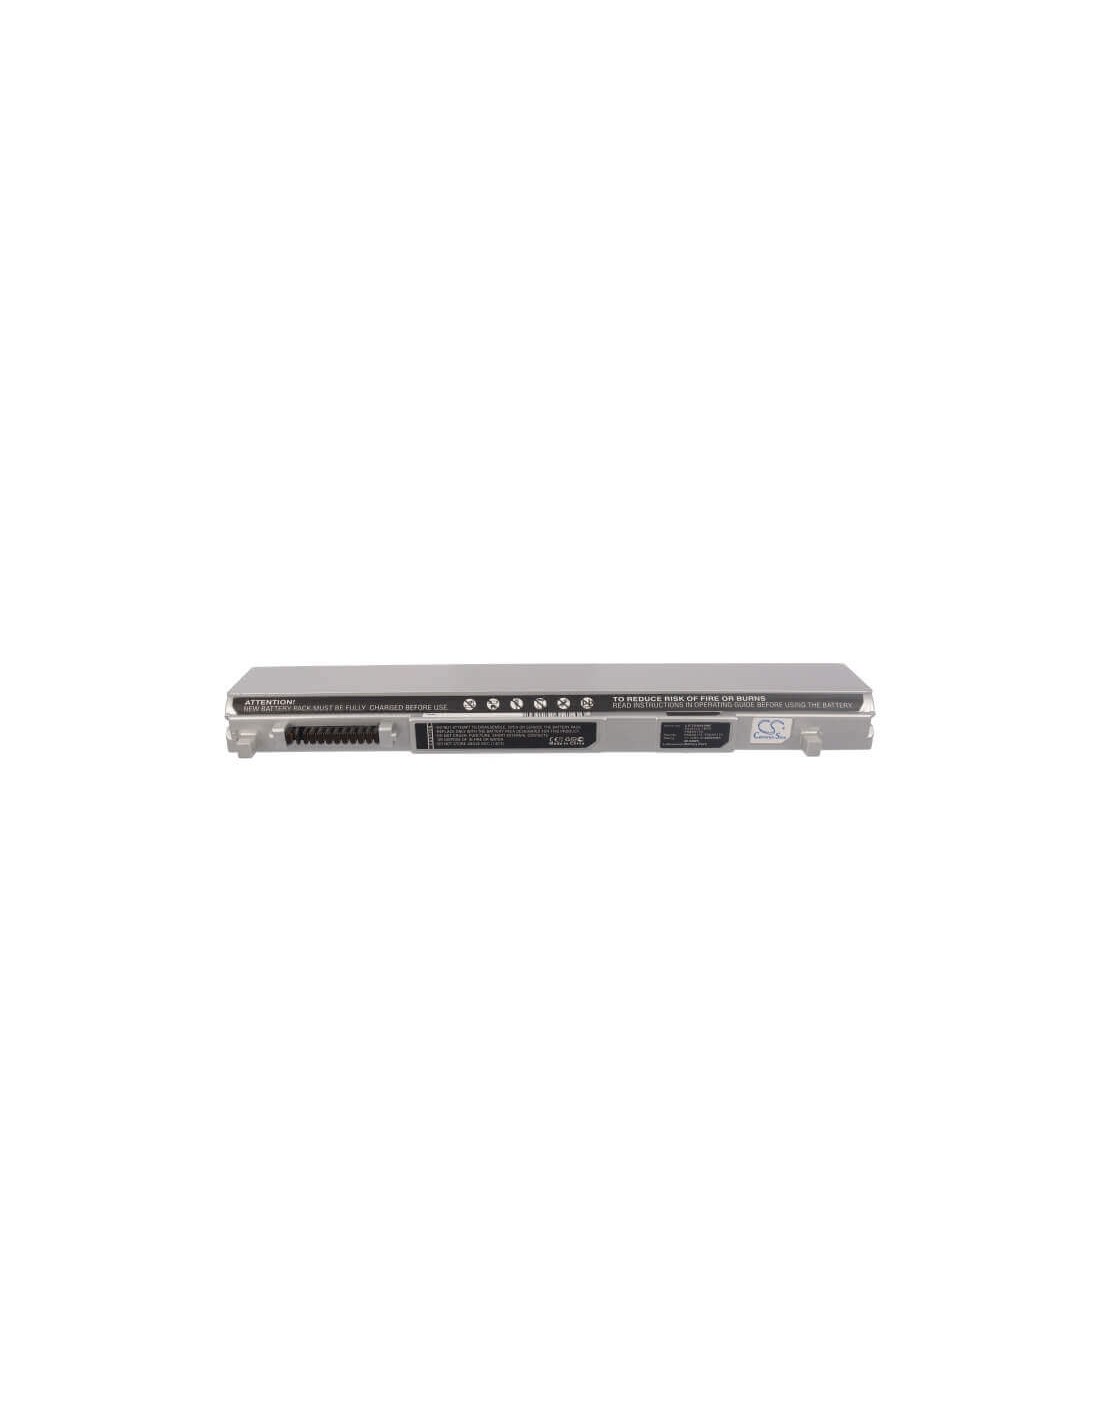 Silver Battery for Toshiba Portege A601, Portege A602, Portege R501 11.1V, 4400mAh - 48.84Wh